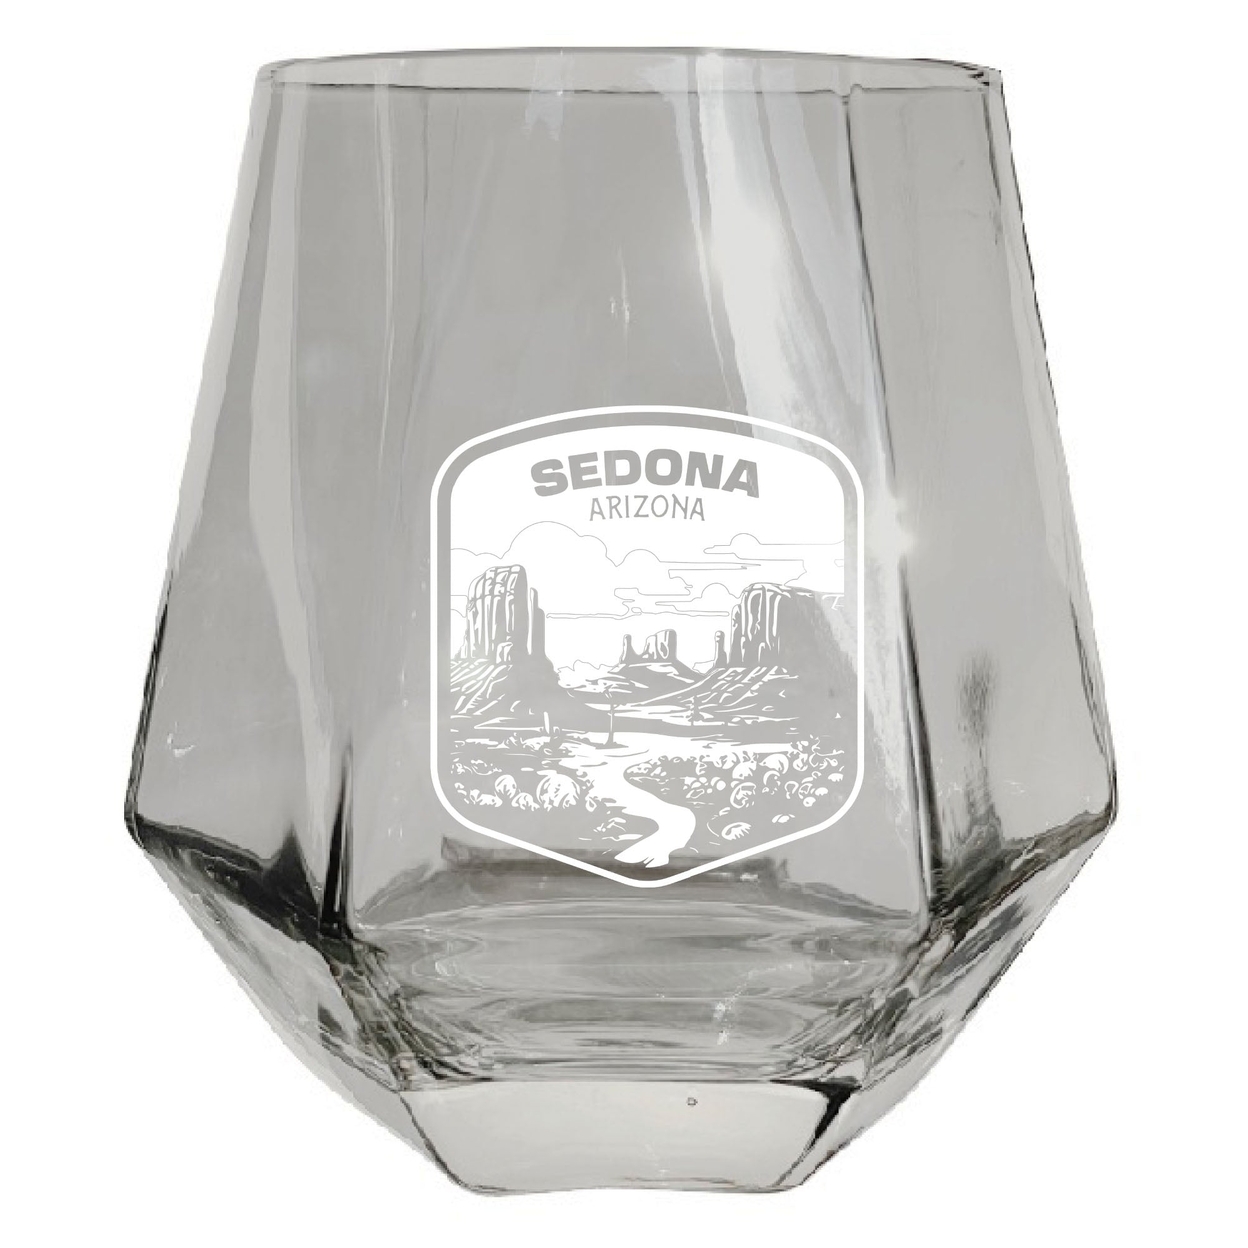 Sedona Arizona Souvenir Wine Glass EngravedDiamond 15 Oz Clear Iridescent - Clear,,Single Unit